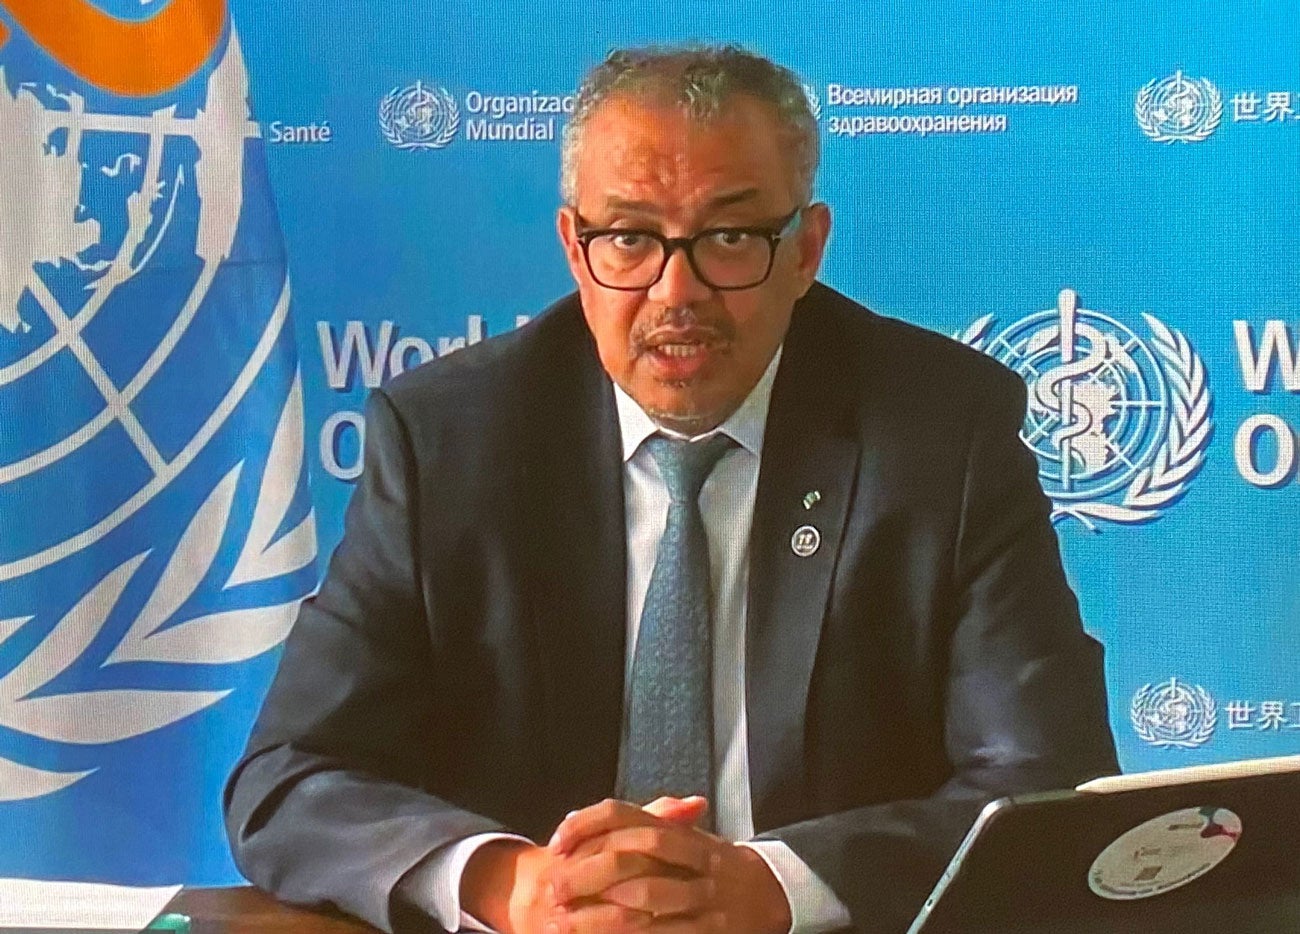 Dr. Tedros Adhanom Ghebreyesus, Director-General, World Health Organization